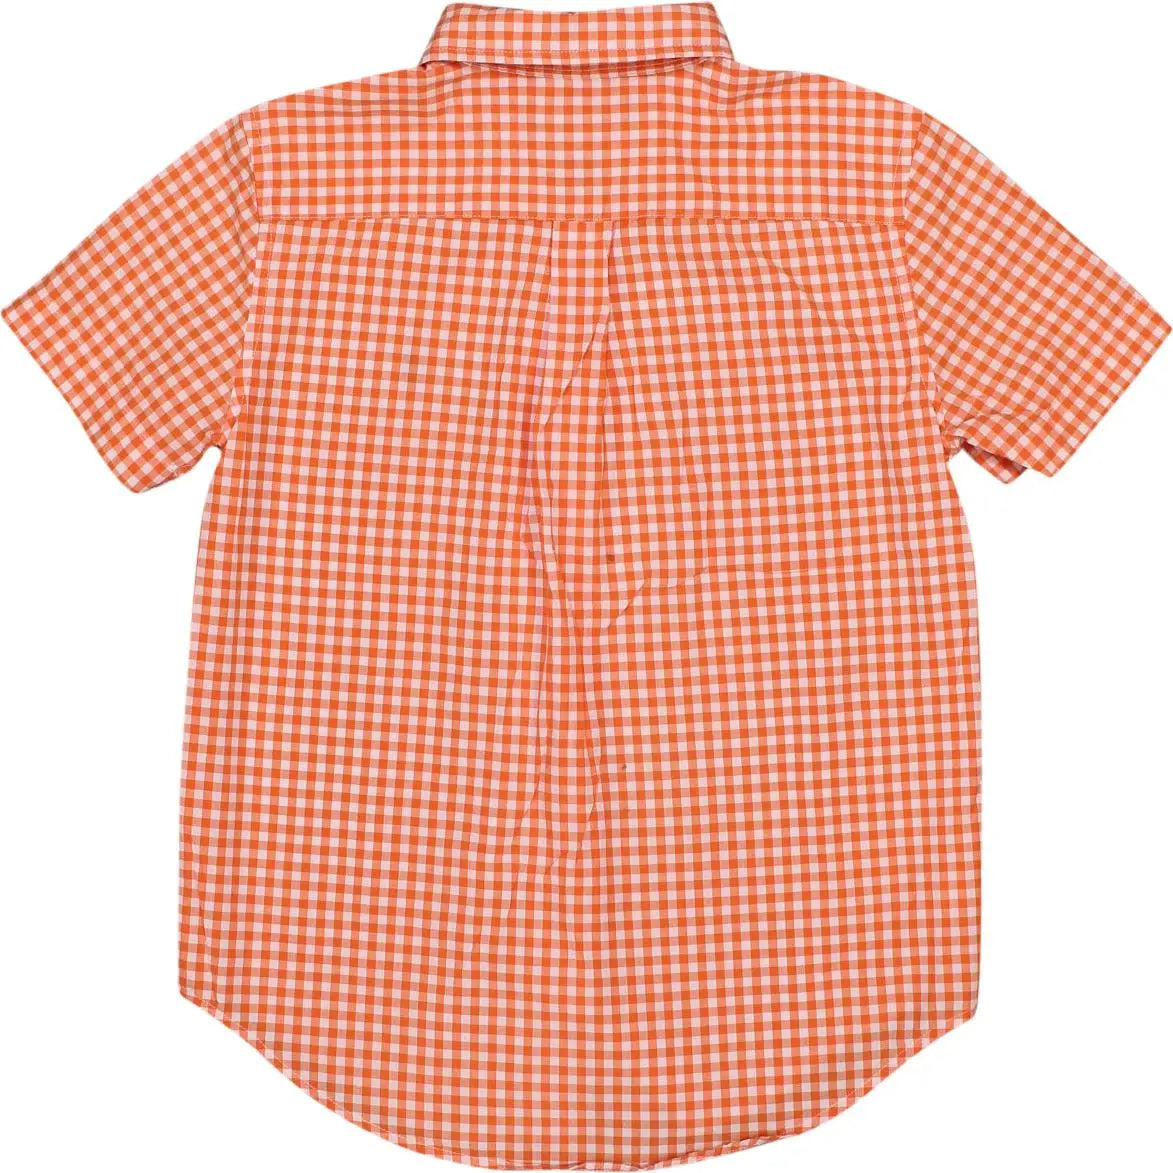 Ralph Lauren - Orange Checked Shirt by Ralph Lauren- ThriftTale.com - Vintage and second handclothing